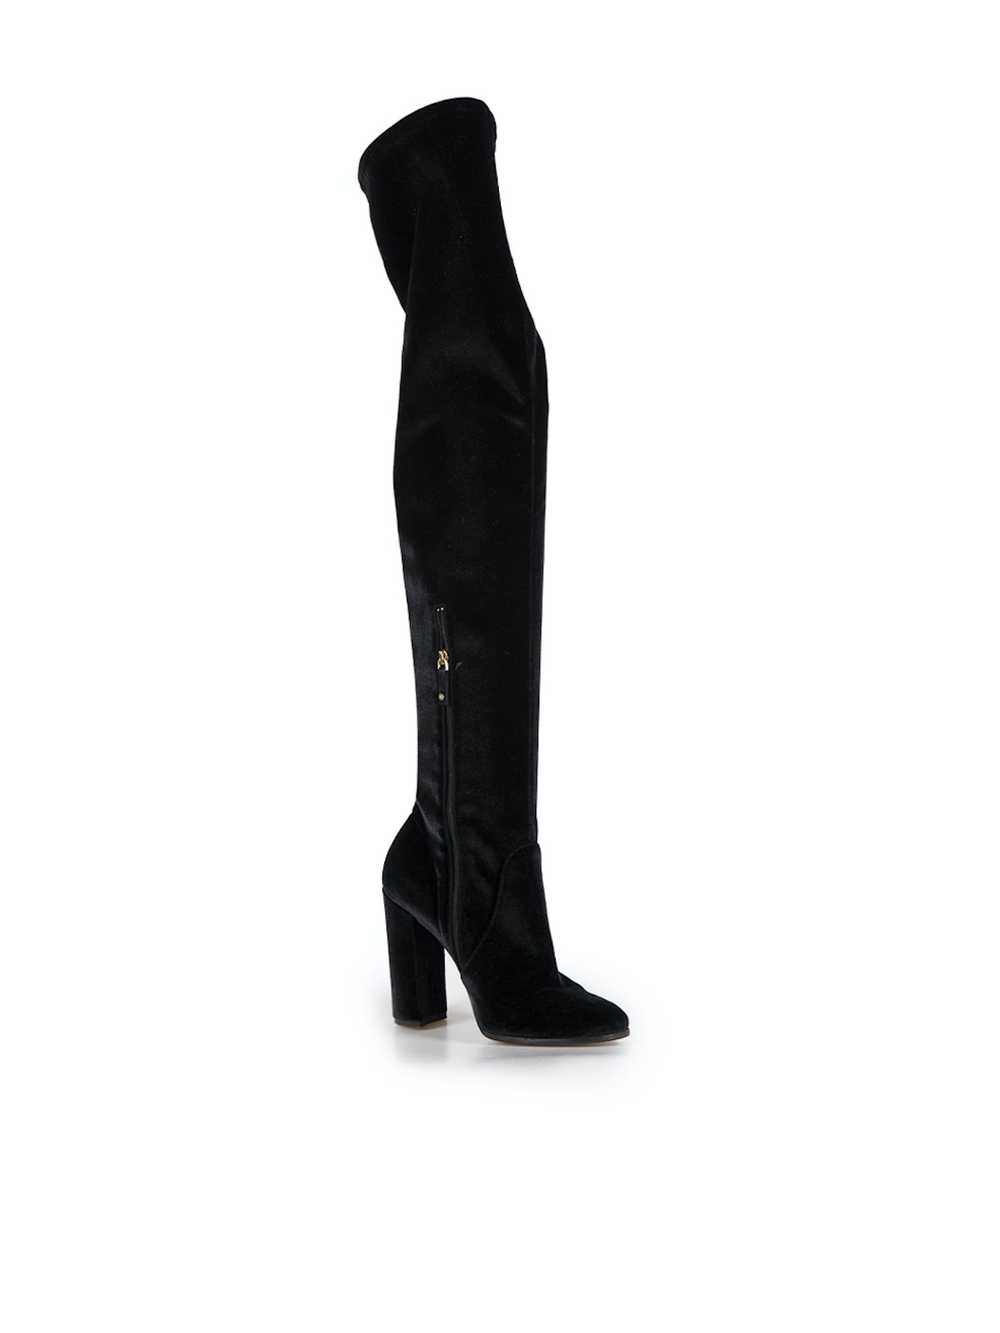 Ermanno Scervino Black Velvet Thigh High Boots - image 2